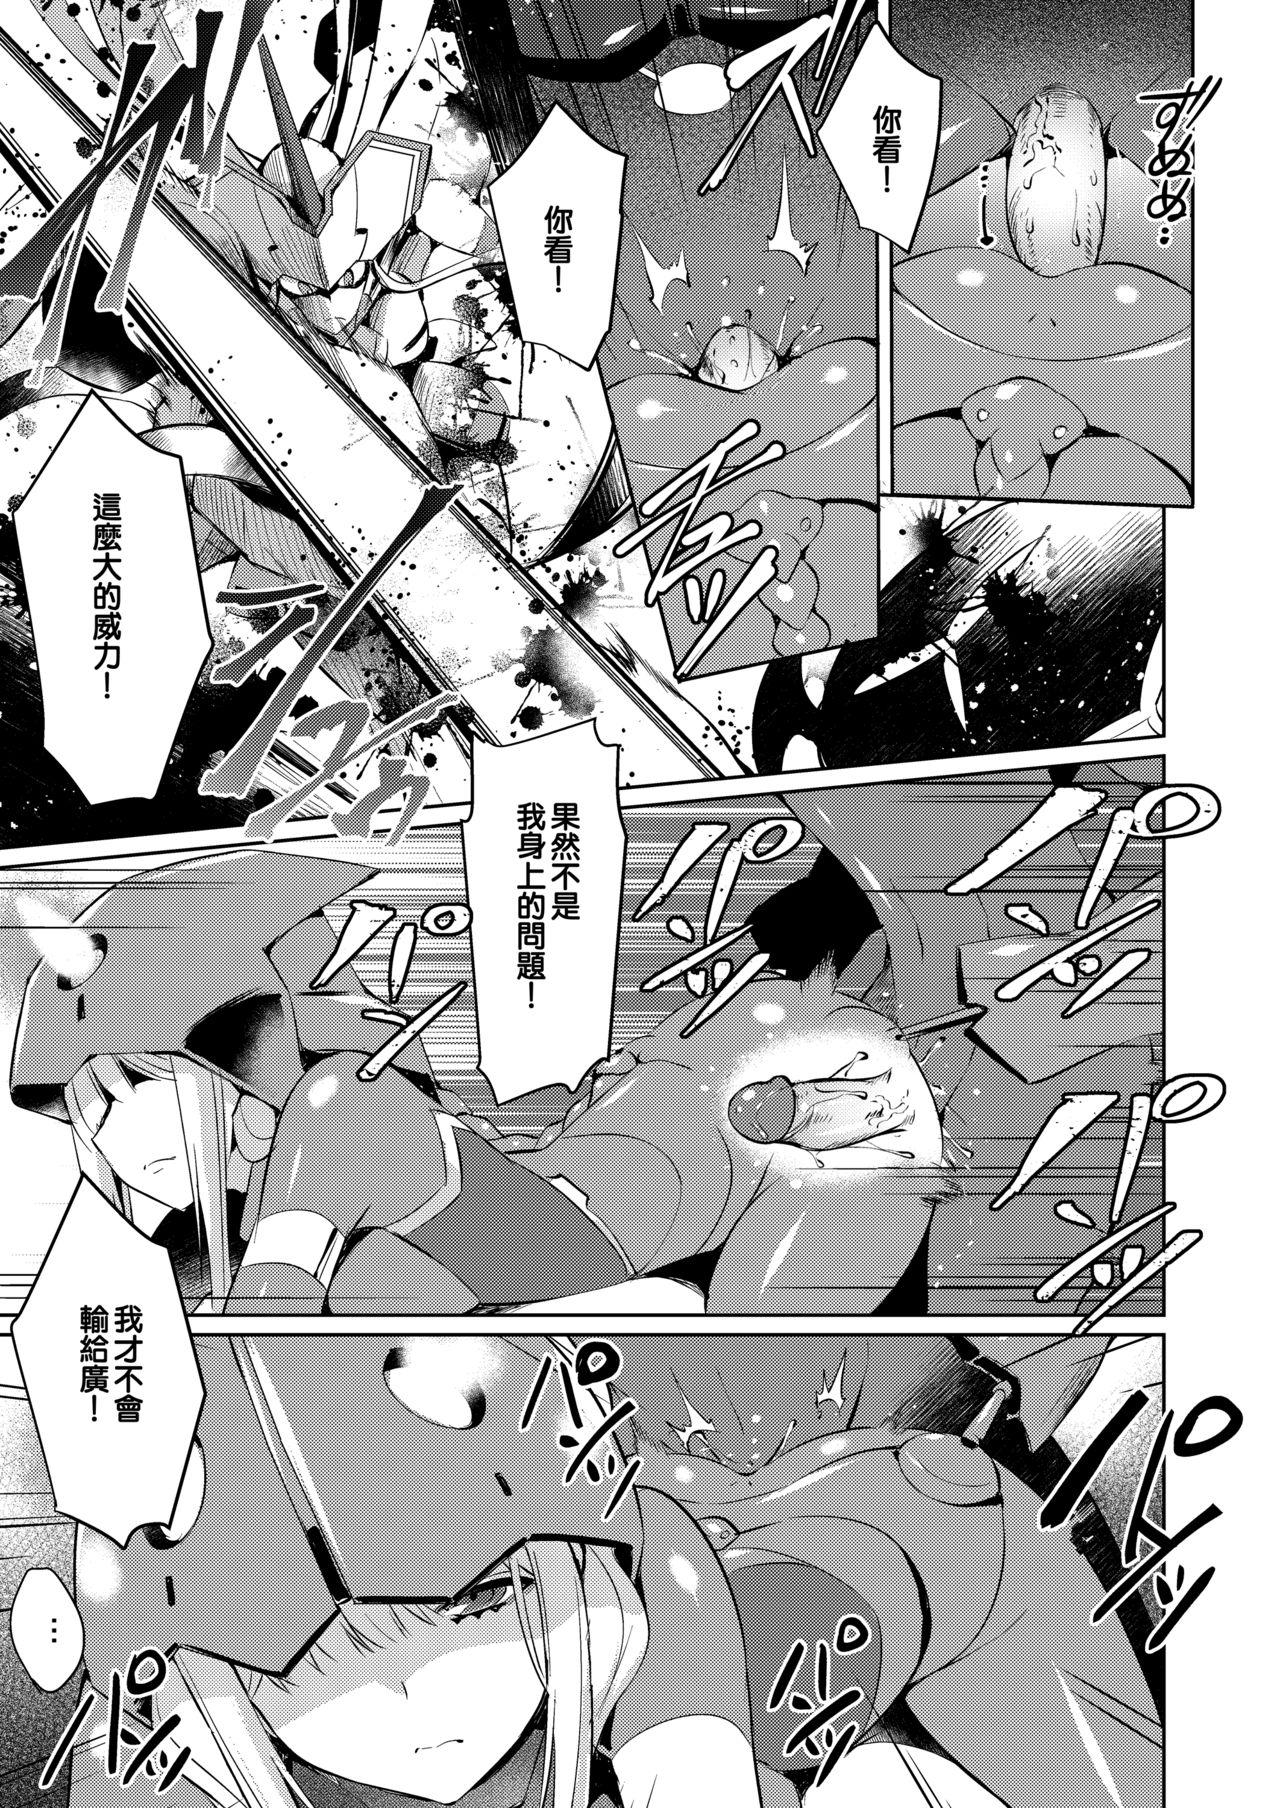 Tied Mitsuru in the Zero Two - Darling in the franxx Hidden Camera - Page 8